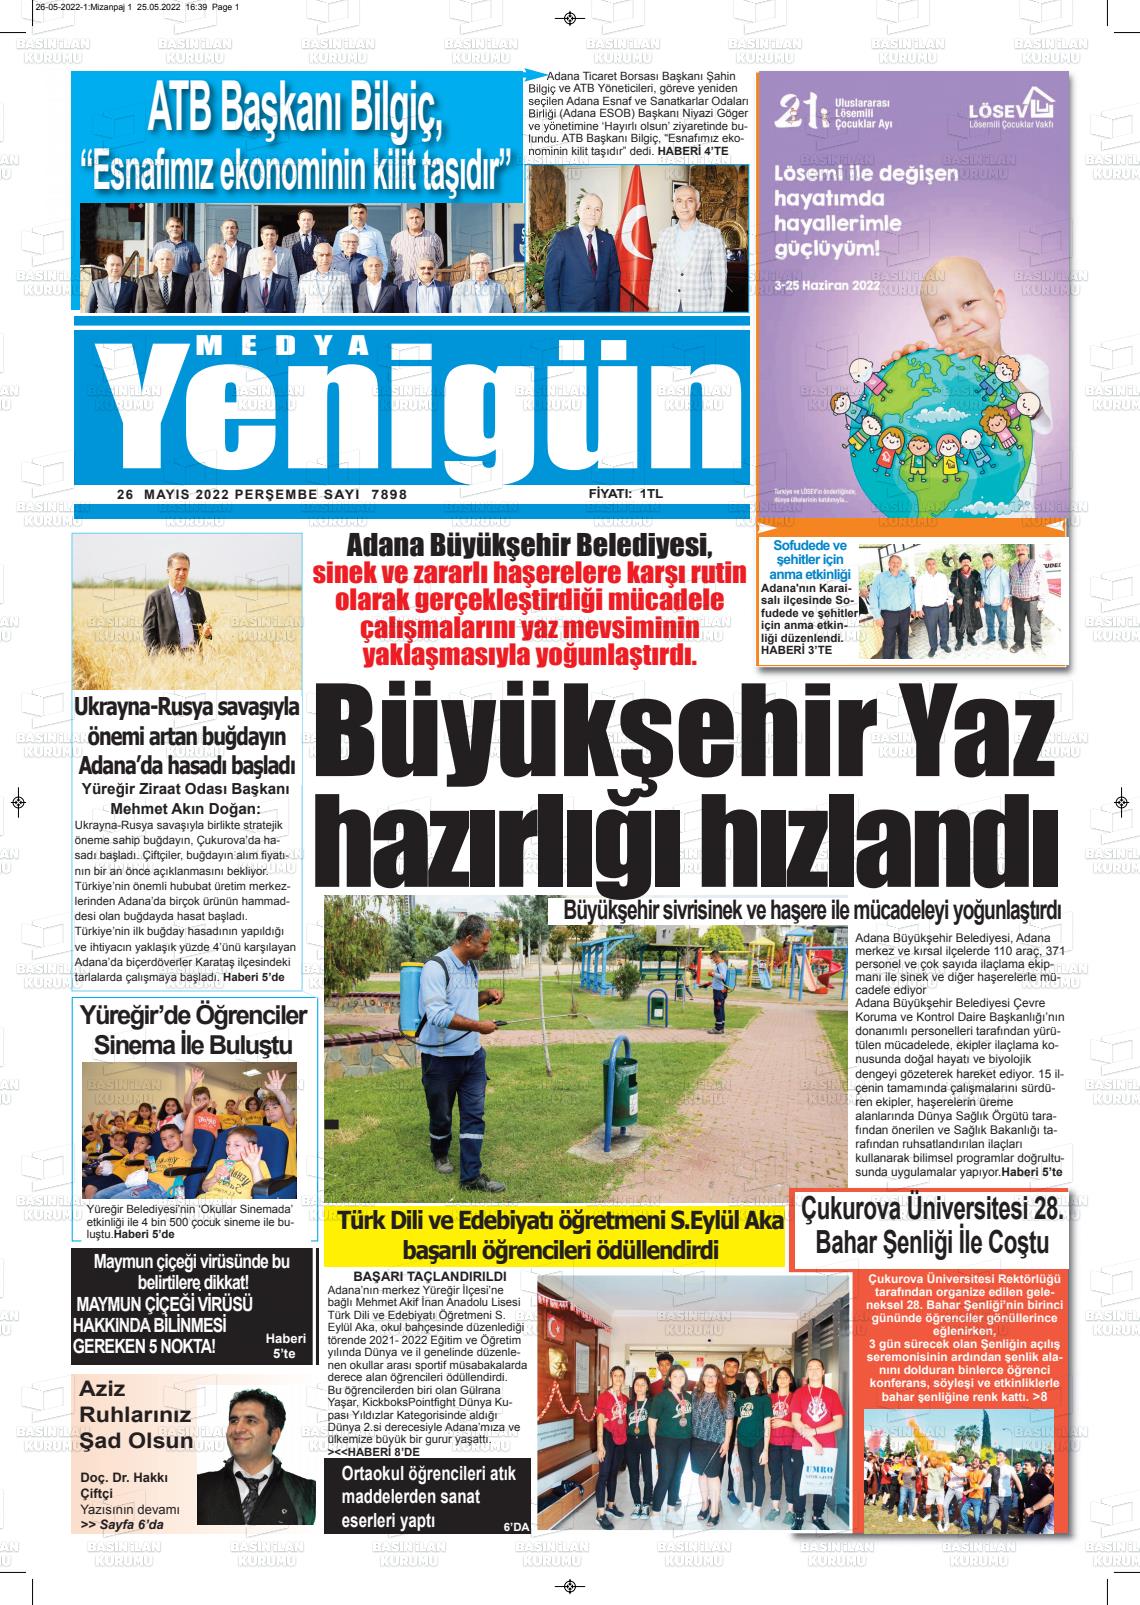 26 Mayıs 2022 Medya Yenigün Gazete Manşeti